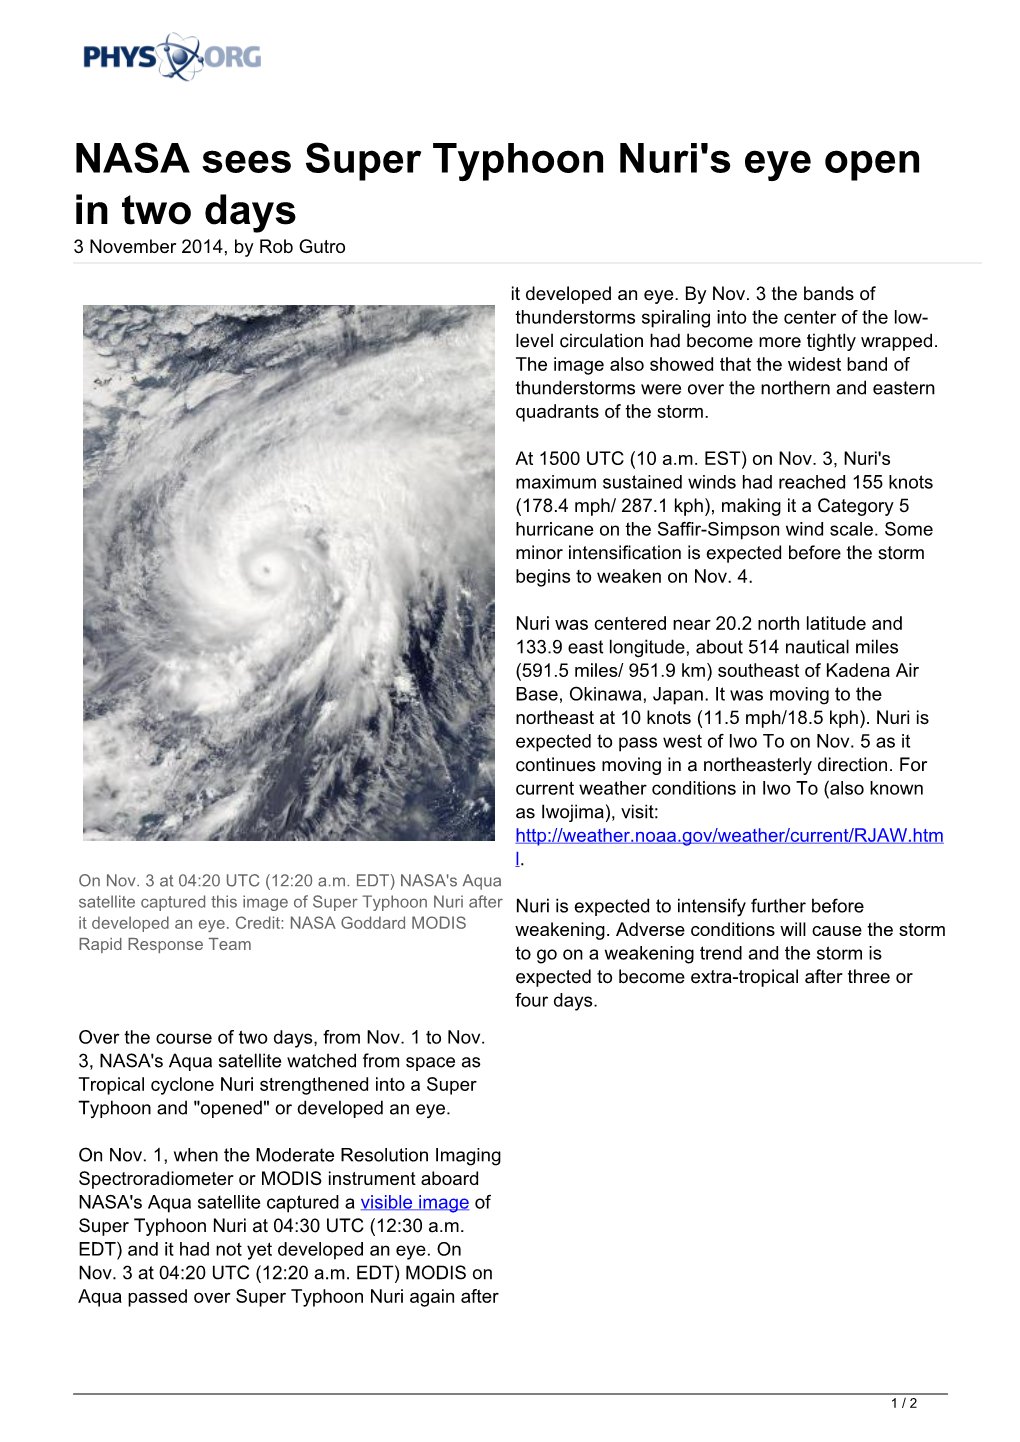 NASA Sees Super Typhoon Nuri's Eye Open in Two Days 3 November 2014, by Rob Gutro